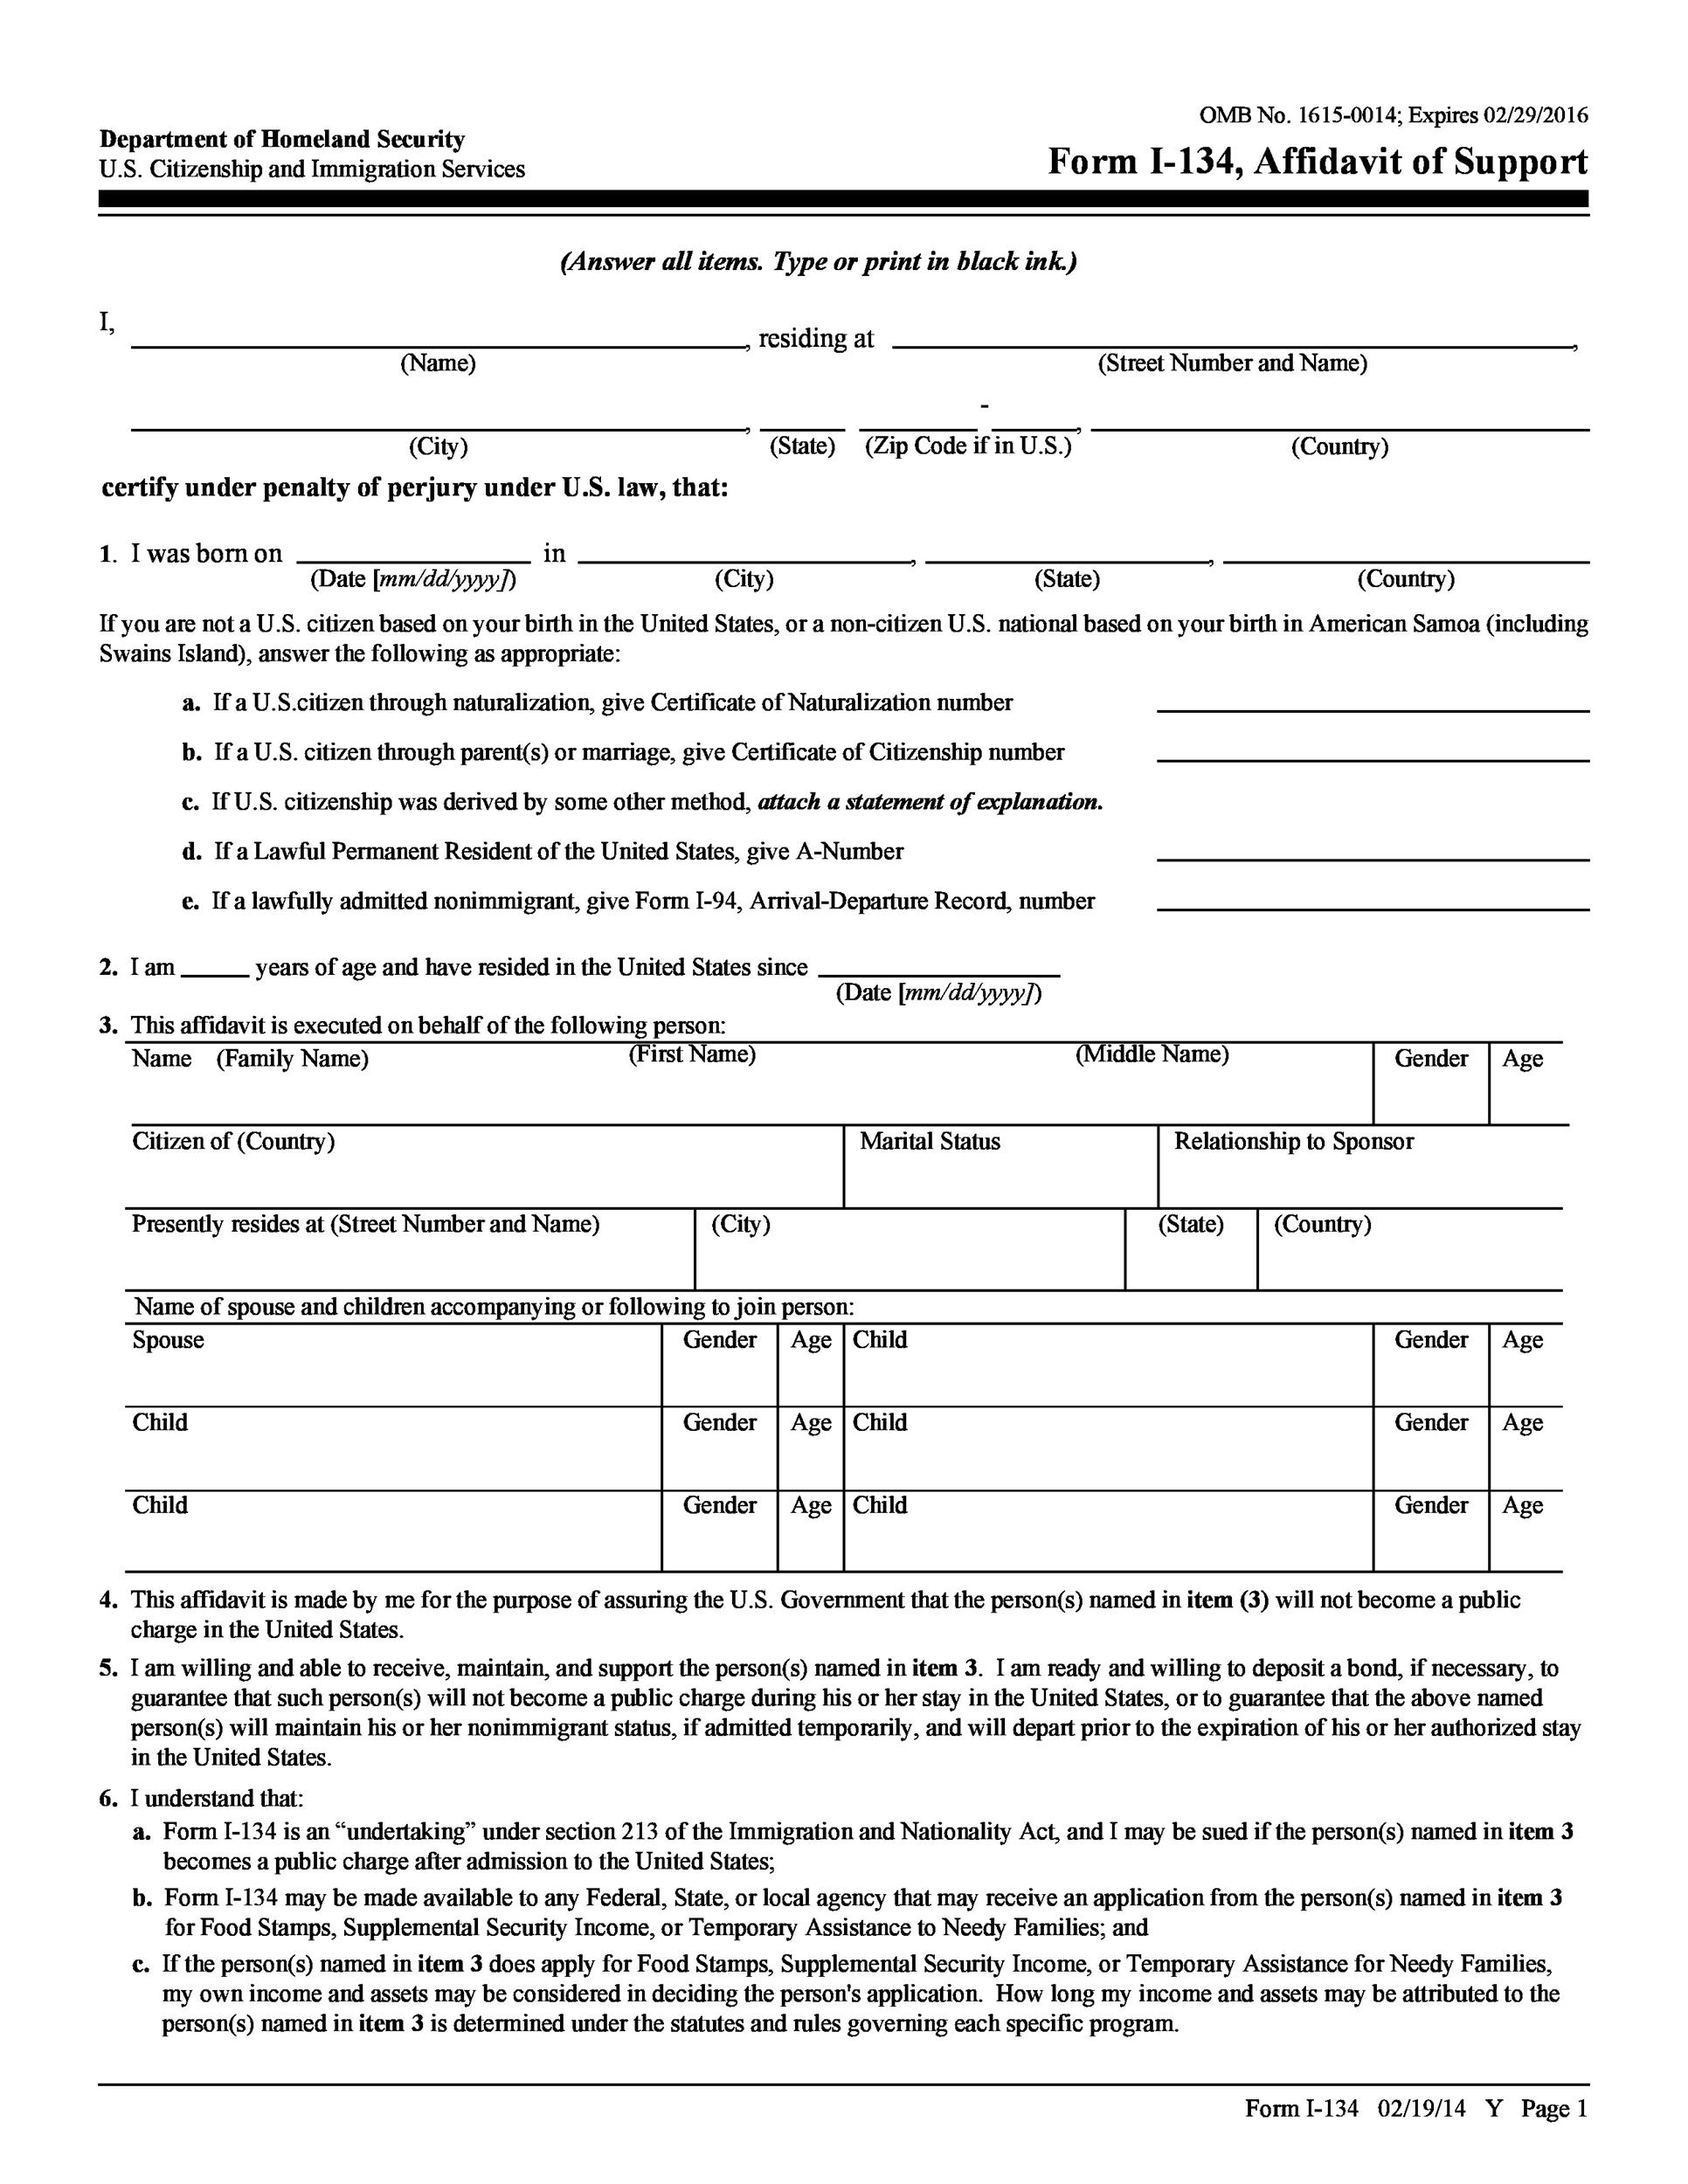 Free affidavit form 31